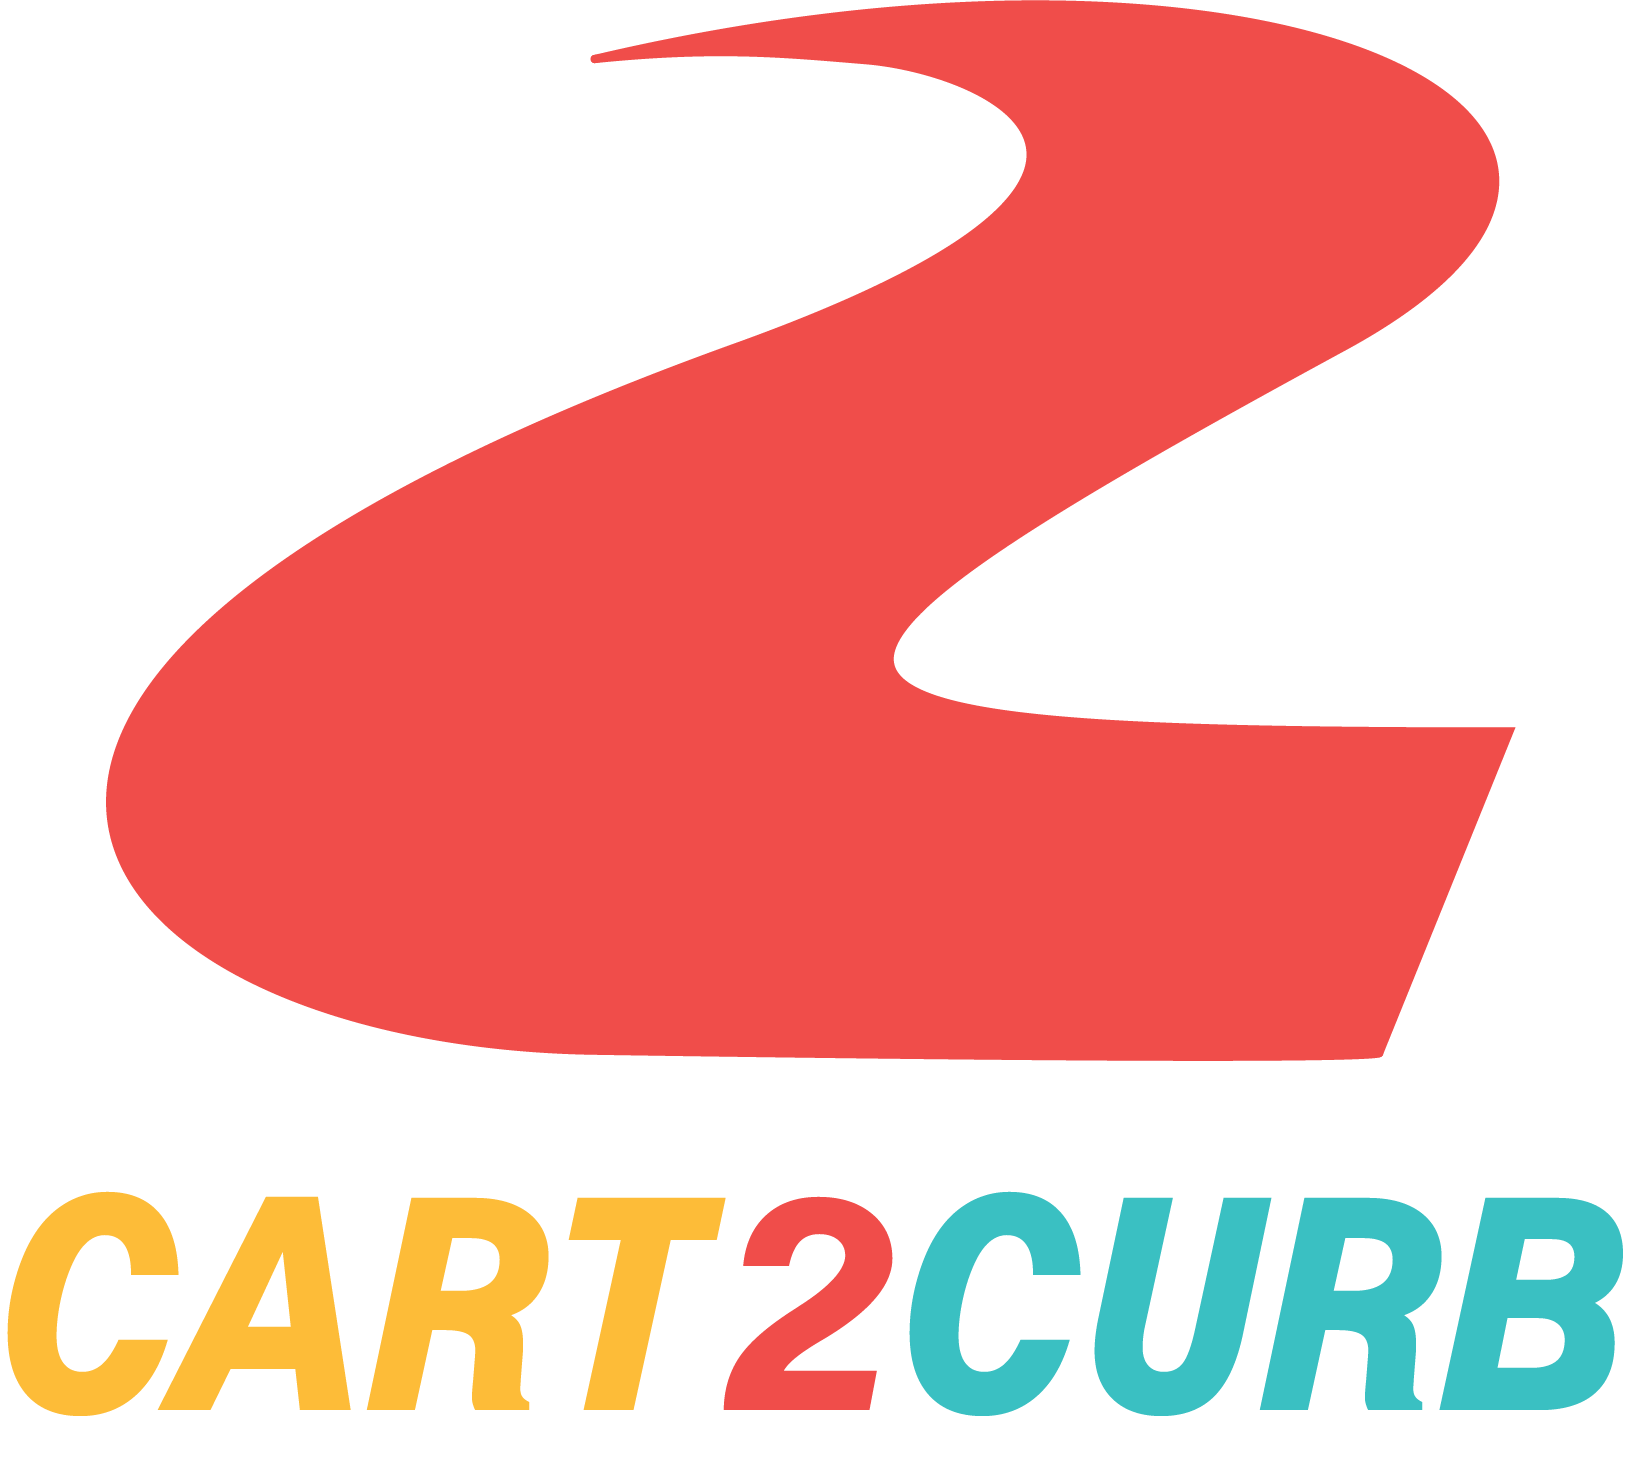 Cart2Curb